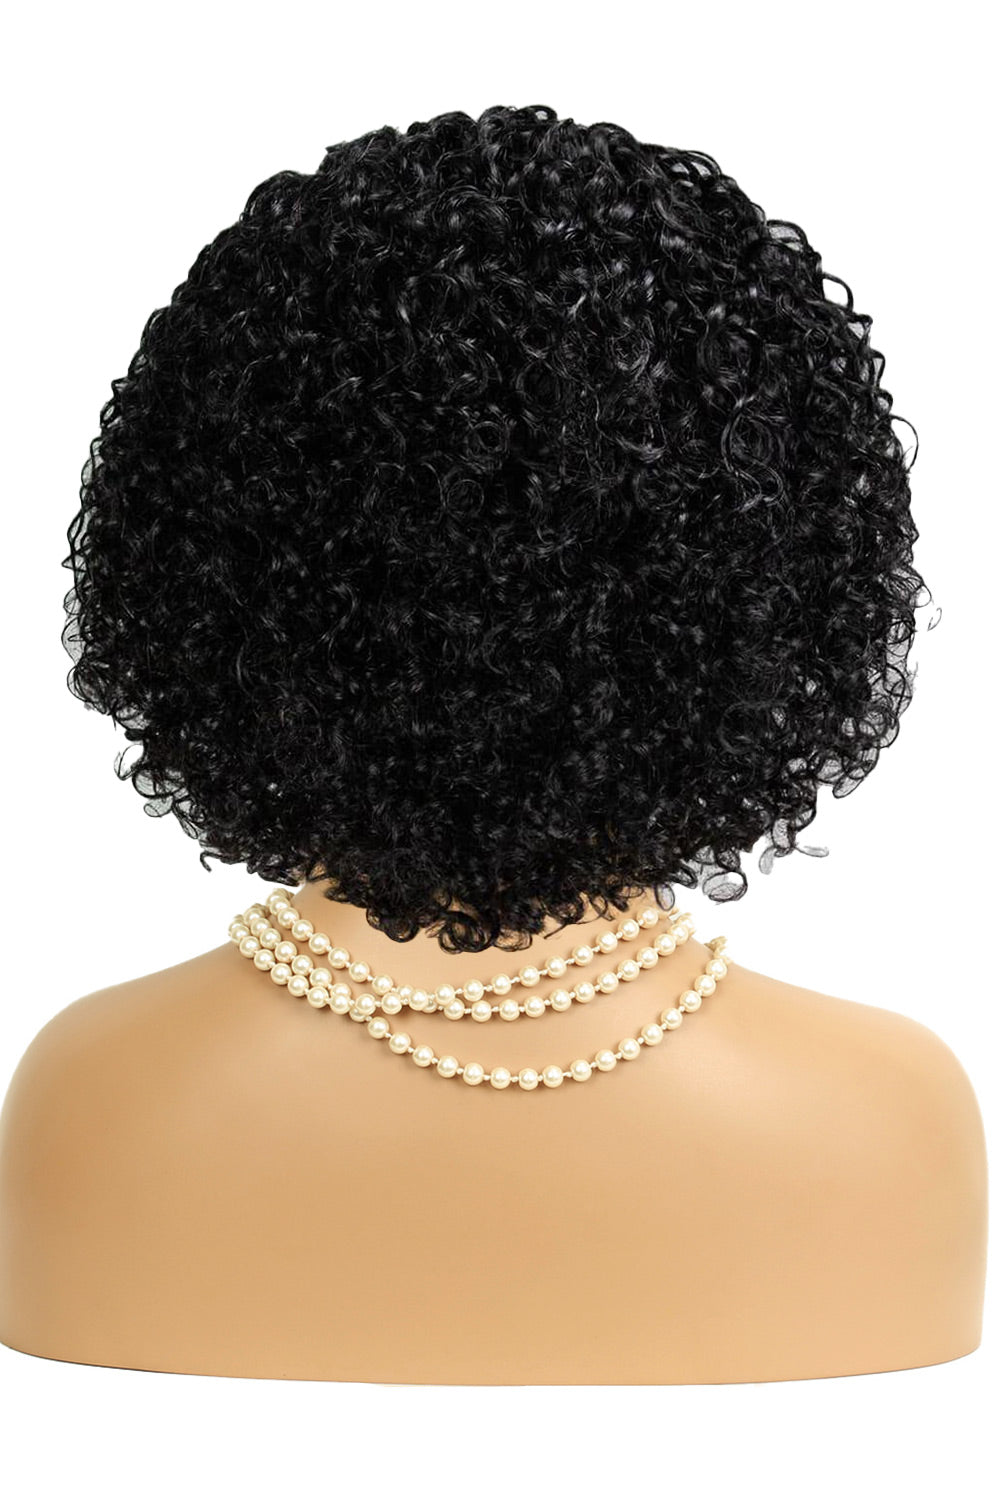 Curly Human Hair Headband Wig Short Bob Fashion Style